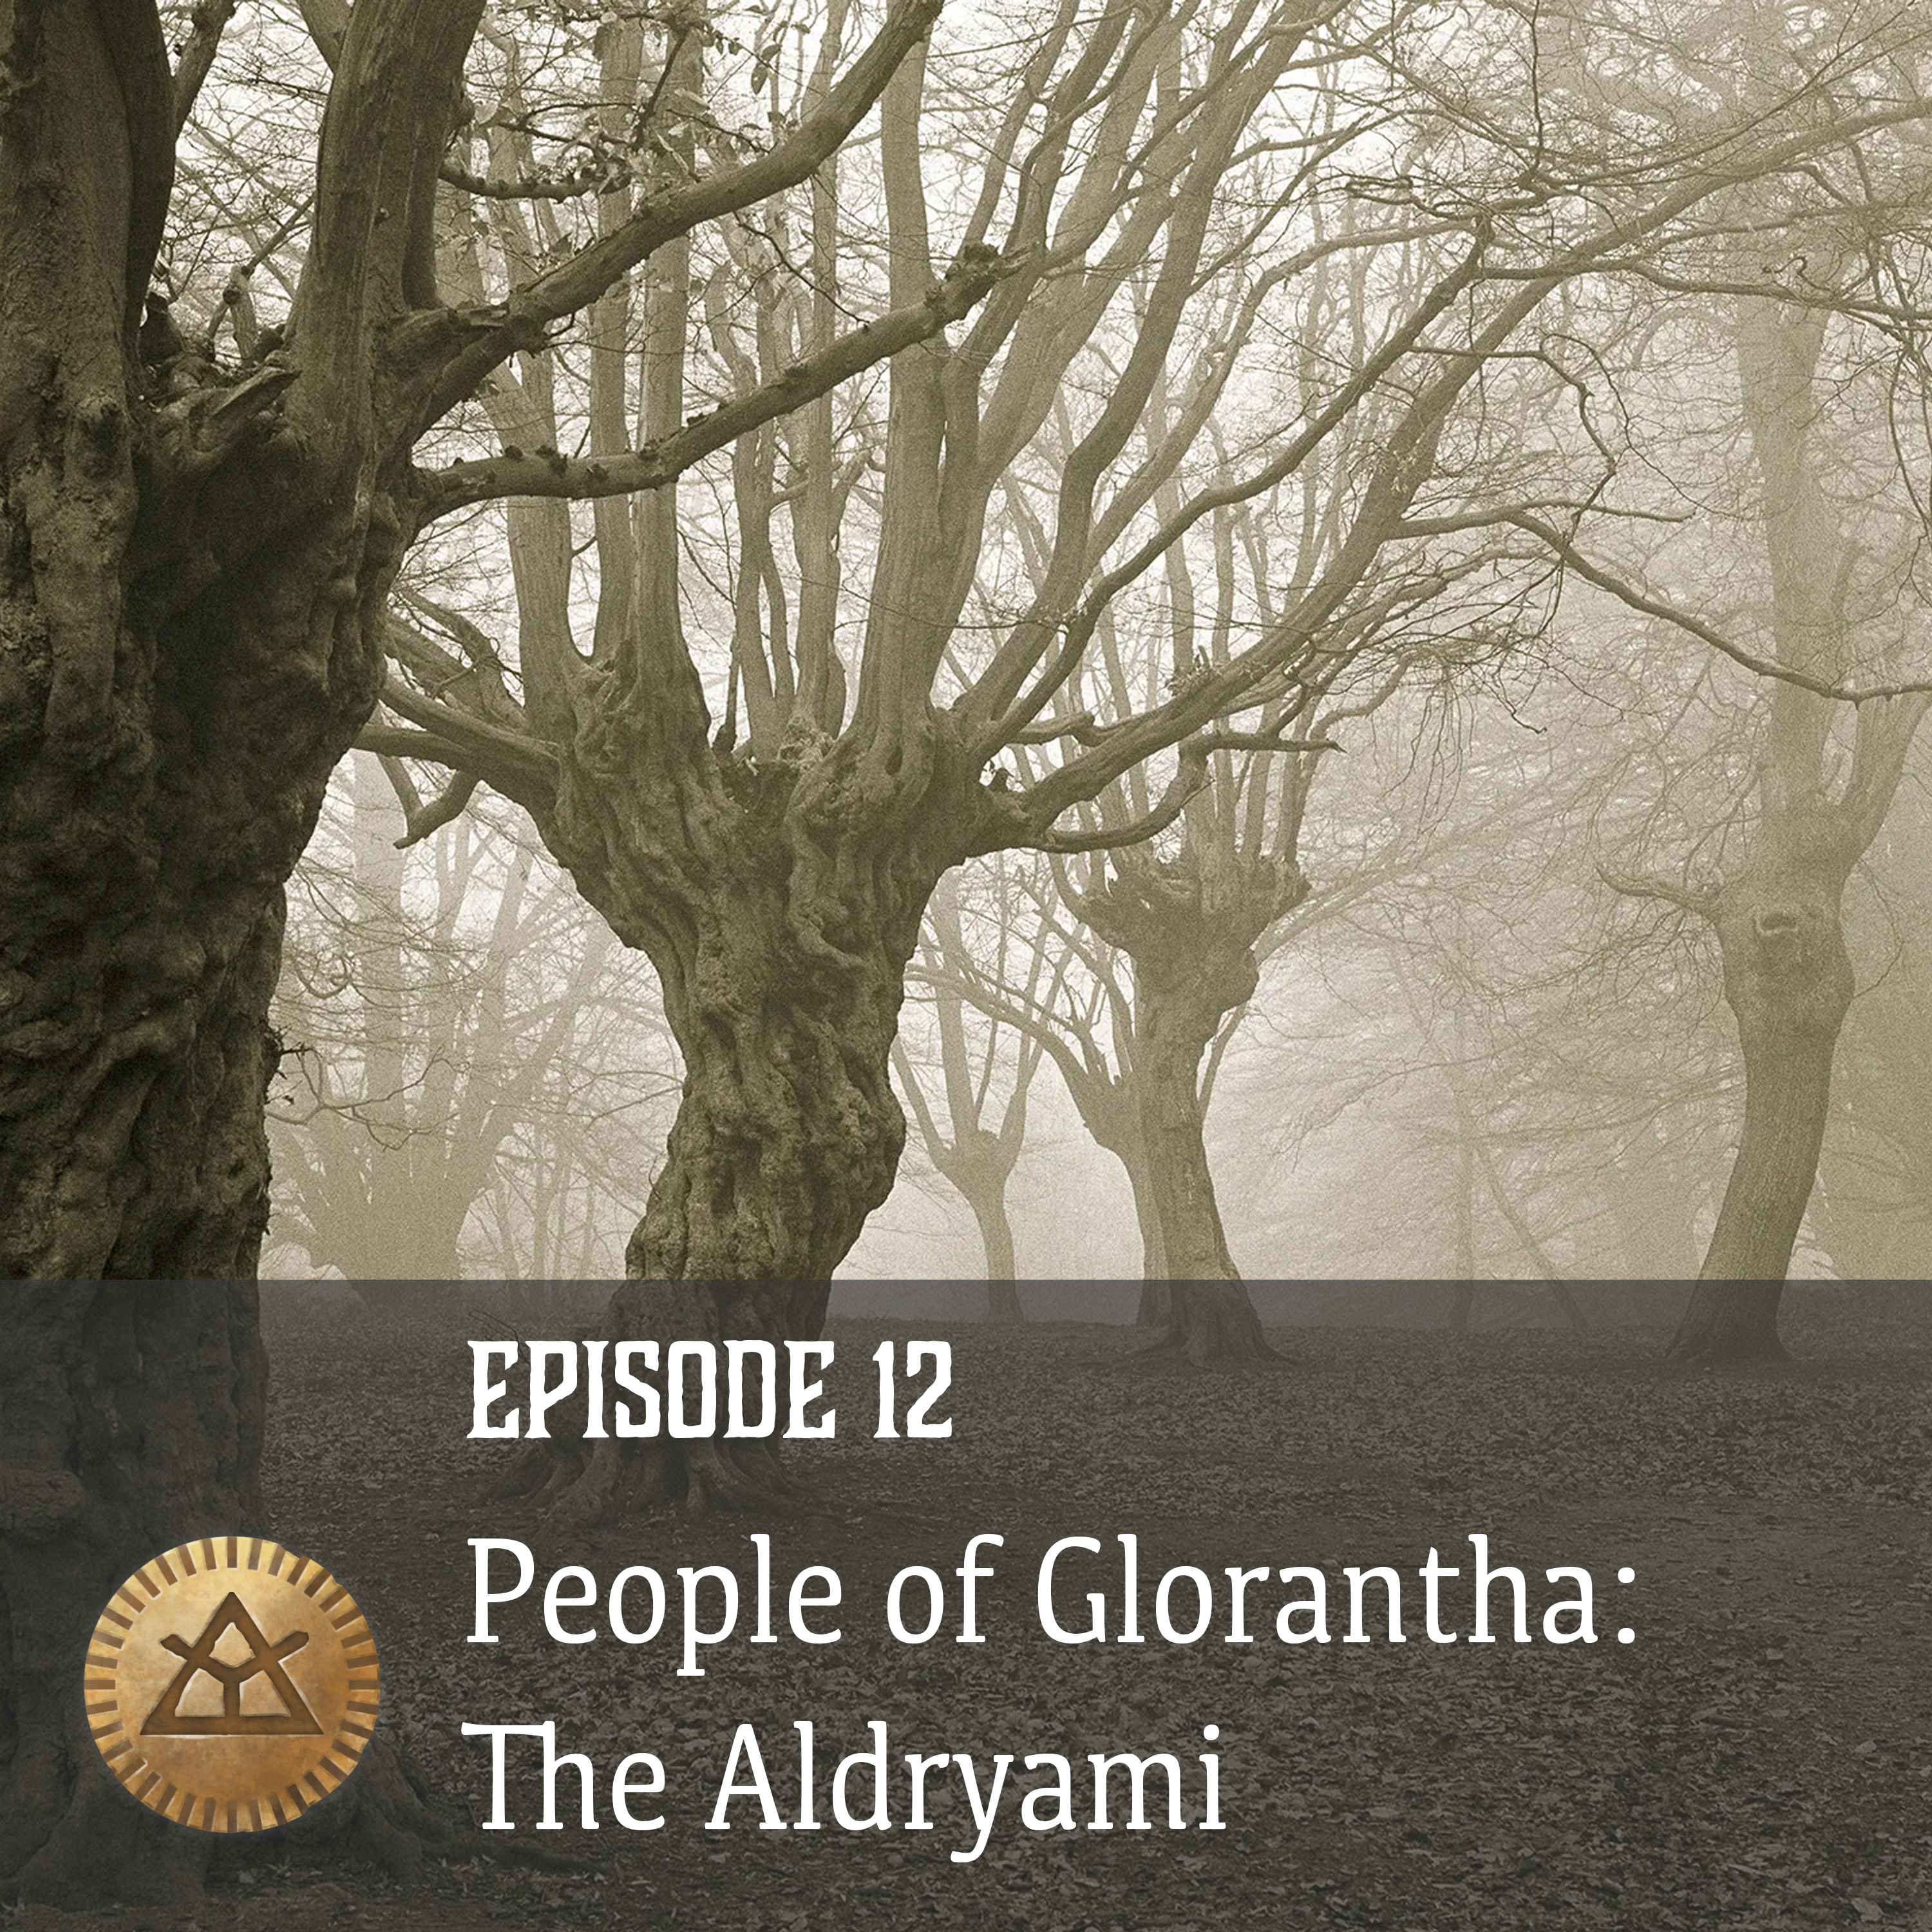 Episode 12: People of Glorantha: The Aldryami